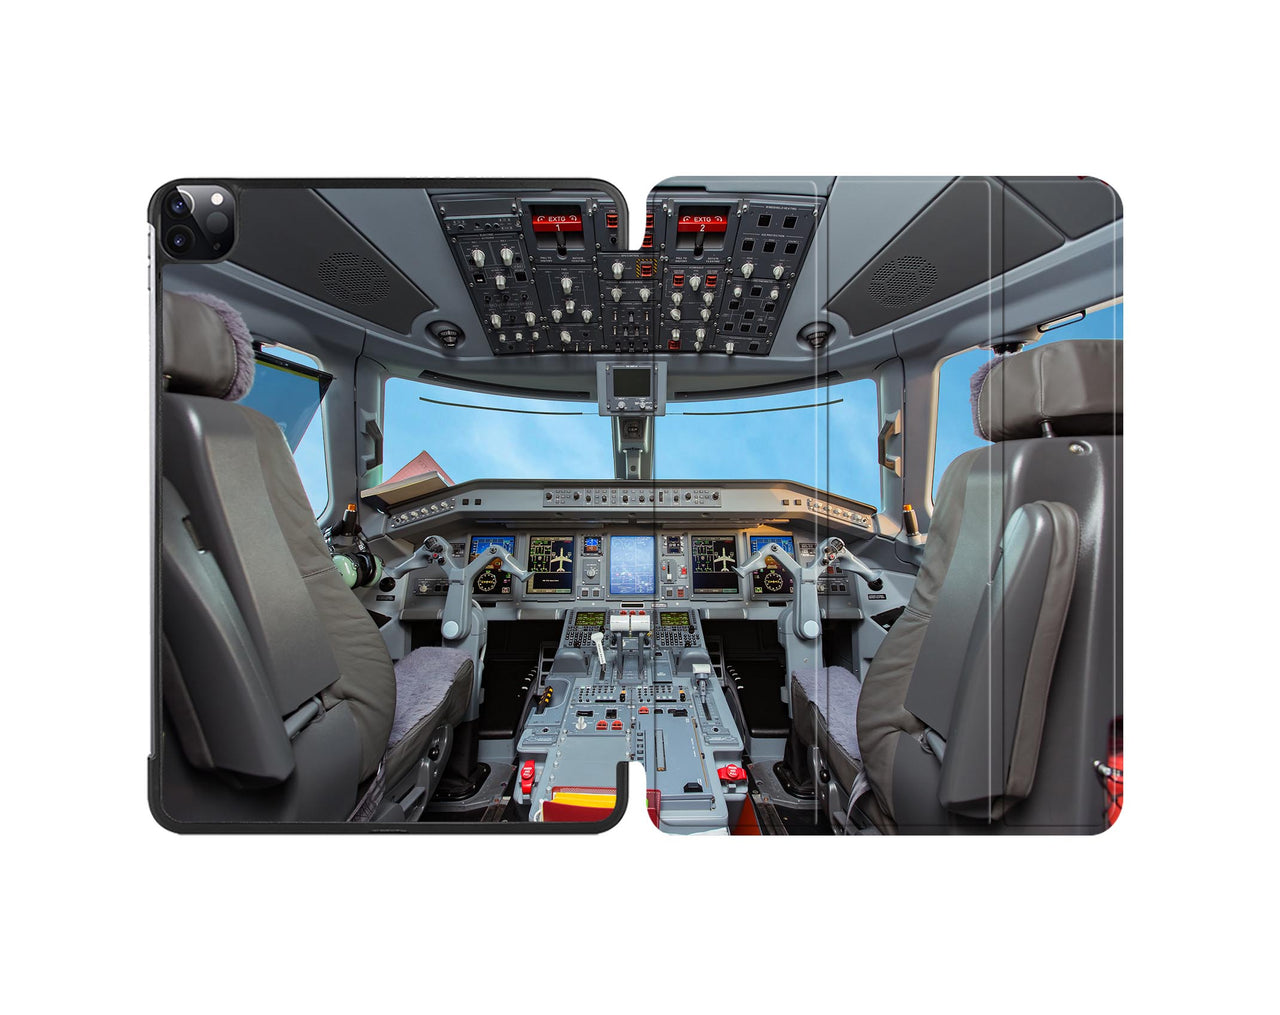 Embraer E190 Cockpit Designed iPad Cases